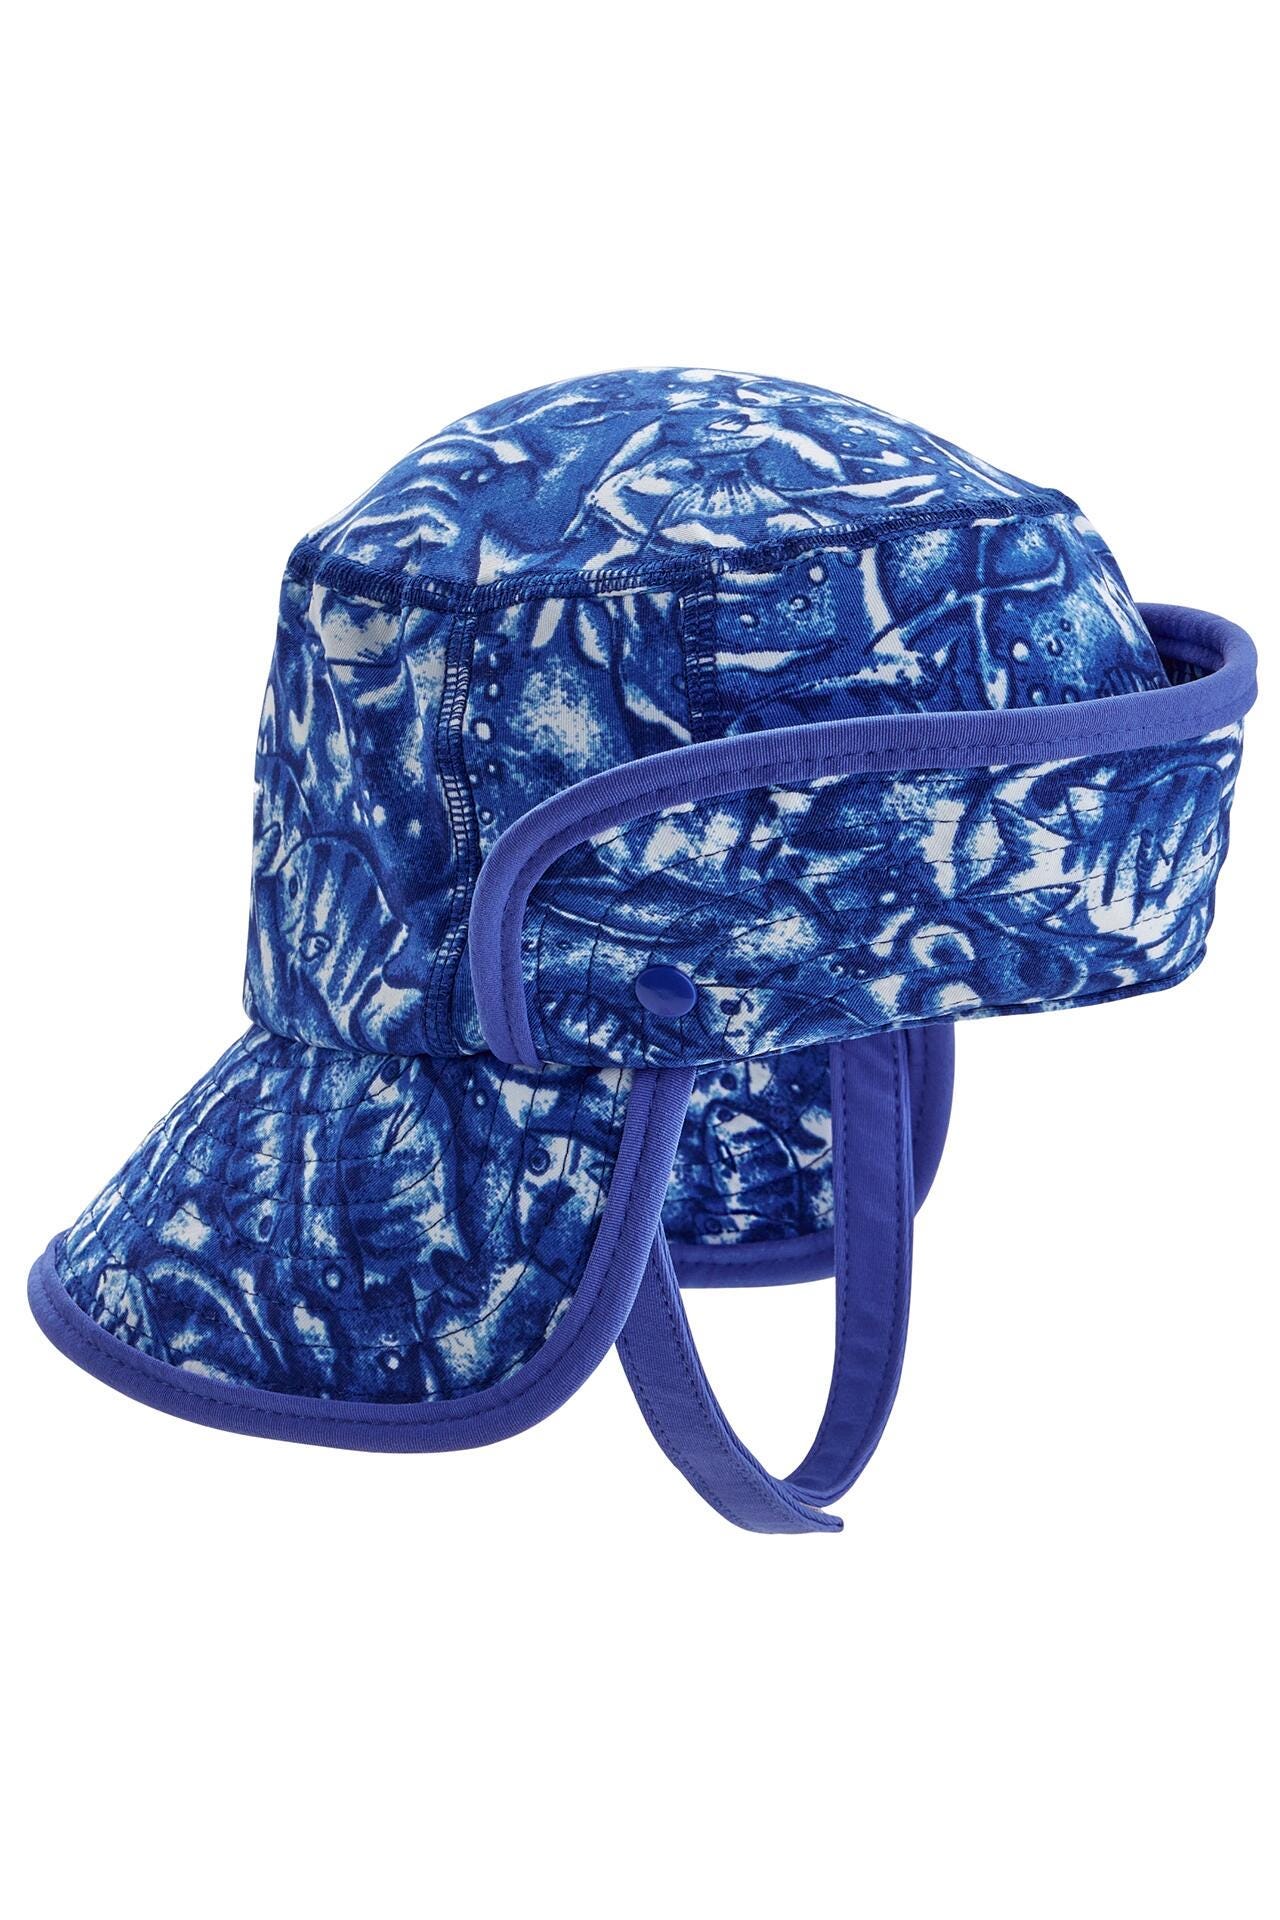 Baby Bucket Fishing Sun Hat，Kids UPF 50+ Wide Brim Sun Protec (Light  Grey,6M-2T)